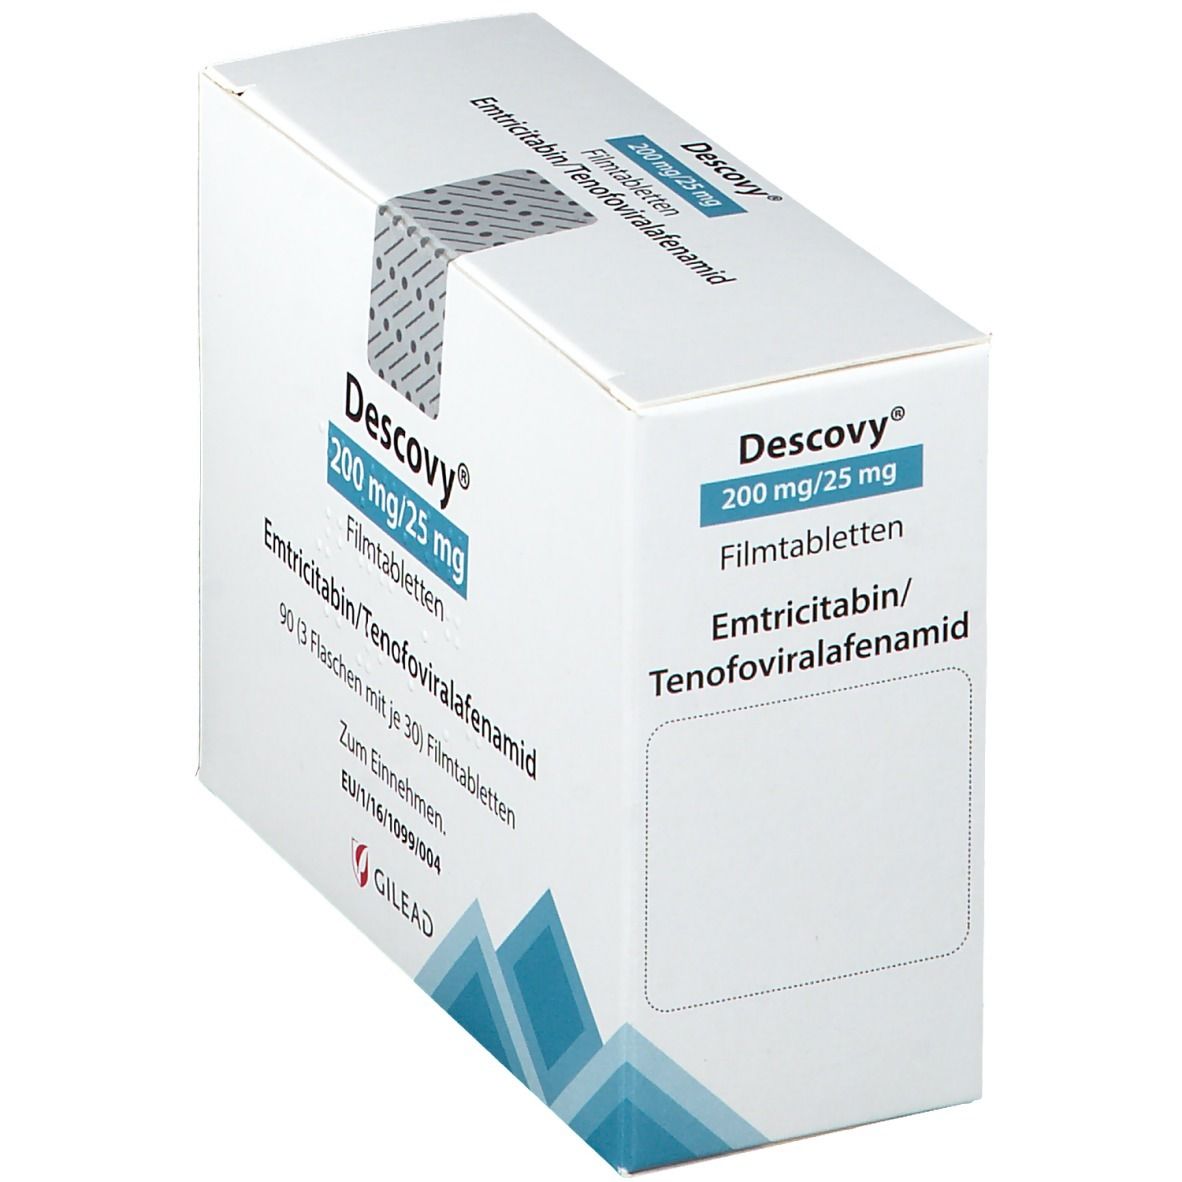 Descovy® 200 mg/25 mg